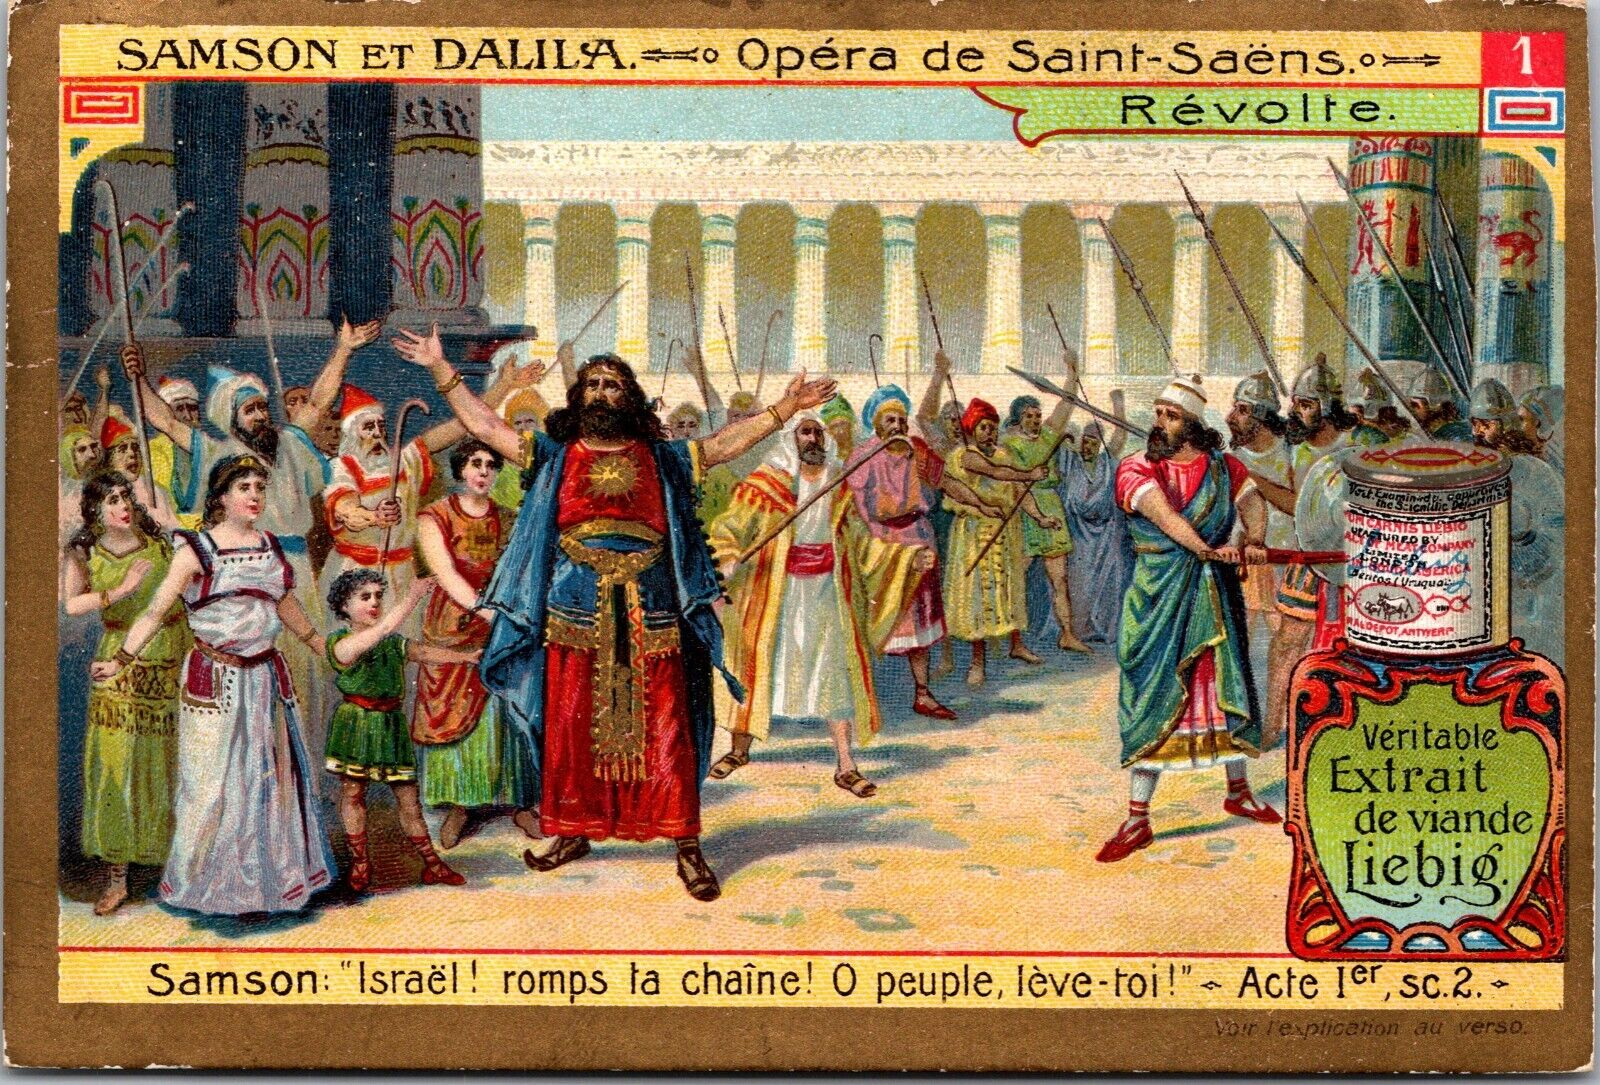 LIEBIG Trade Card Set S-858 Samson Delilah Opera Bible Story 1906